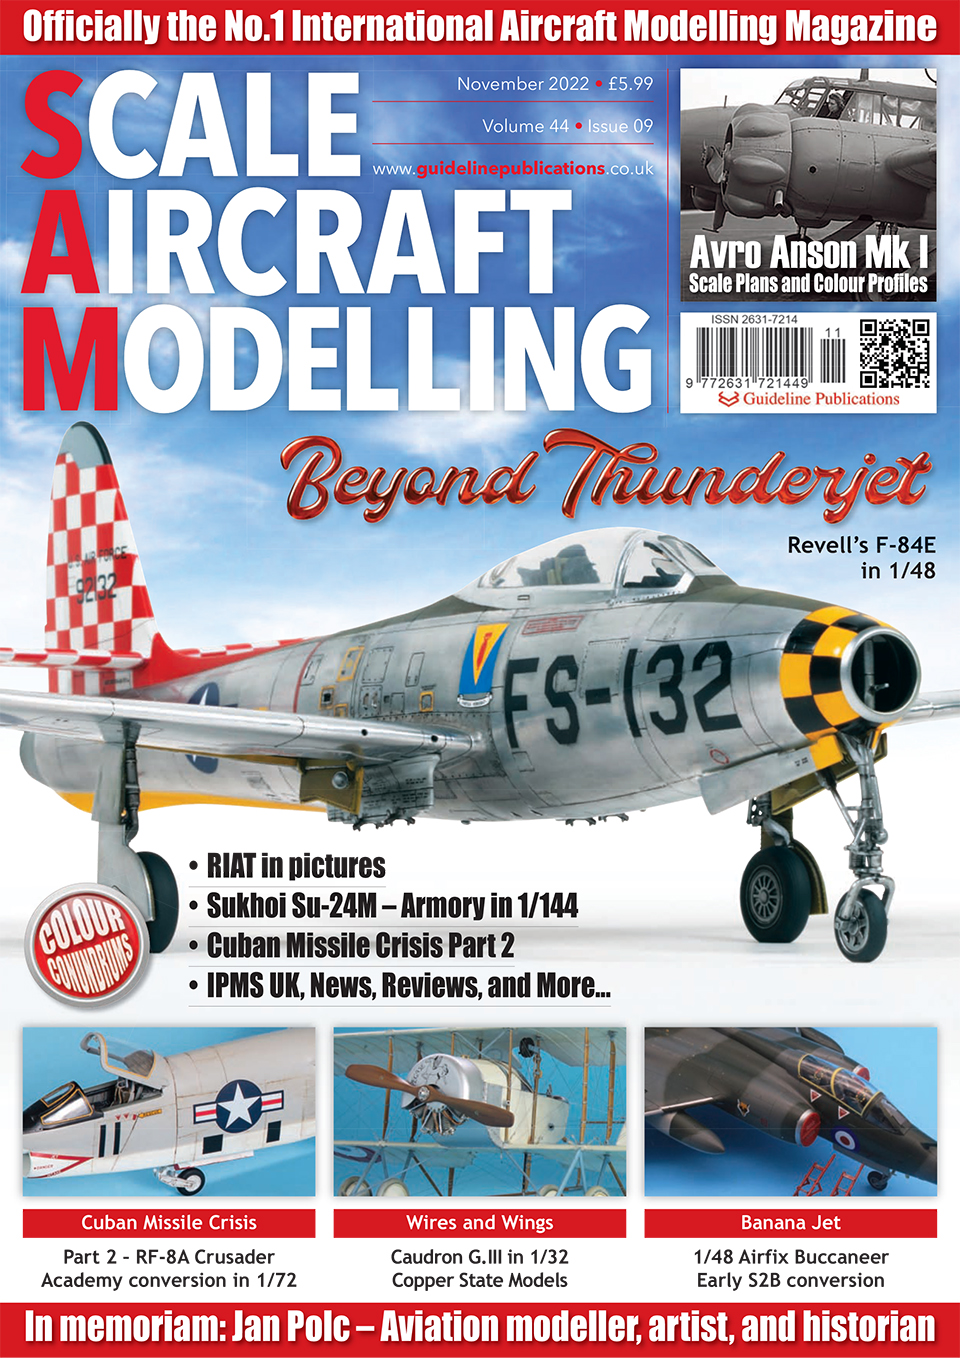 Guideline Publications Ltd Scale Aircraft Modelling Nov 22 Vol 44-09 